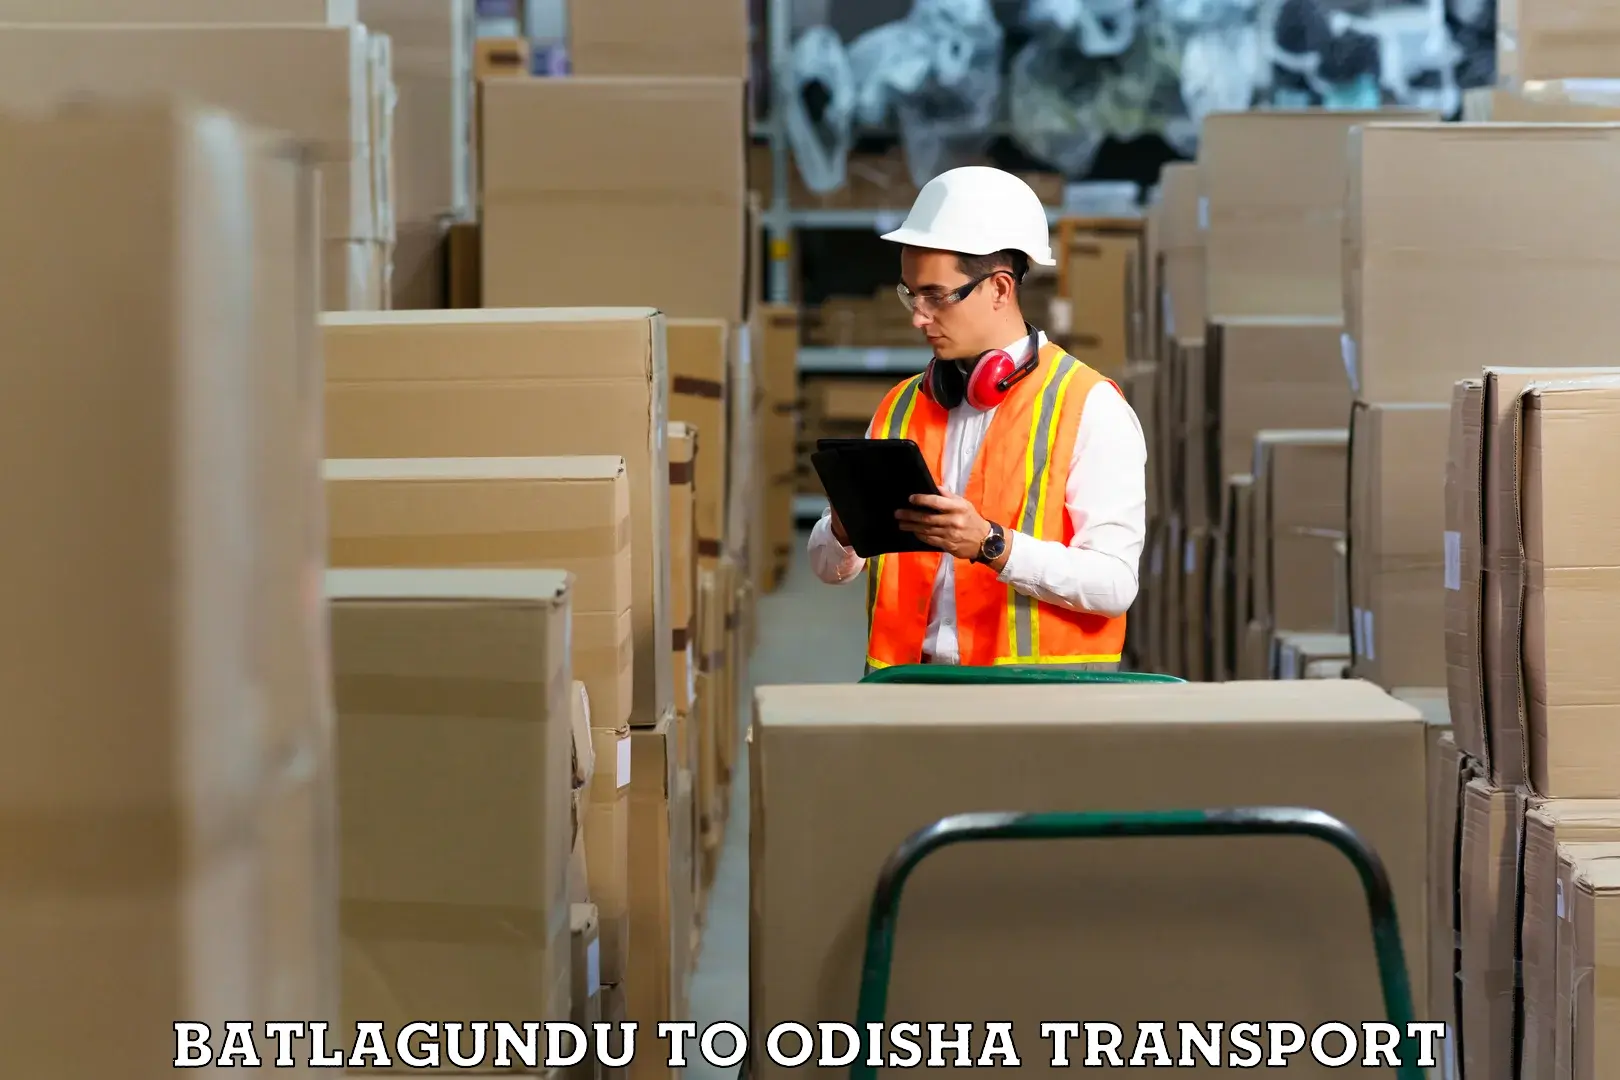 Transport in sharing in Batlagundu to Odisha